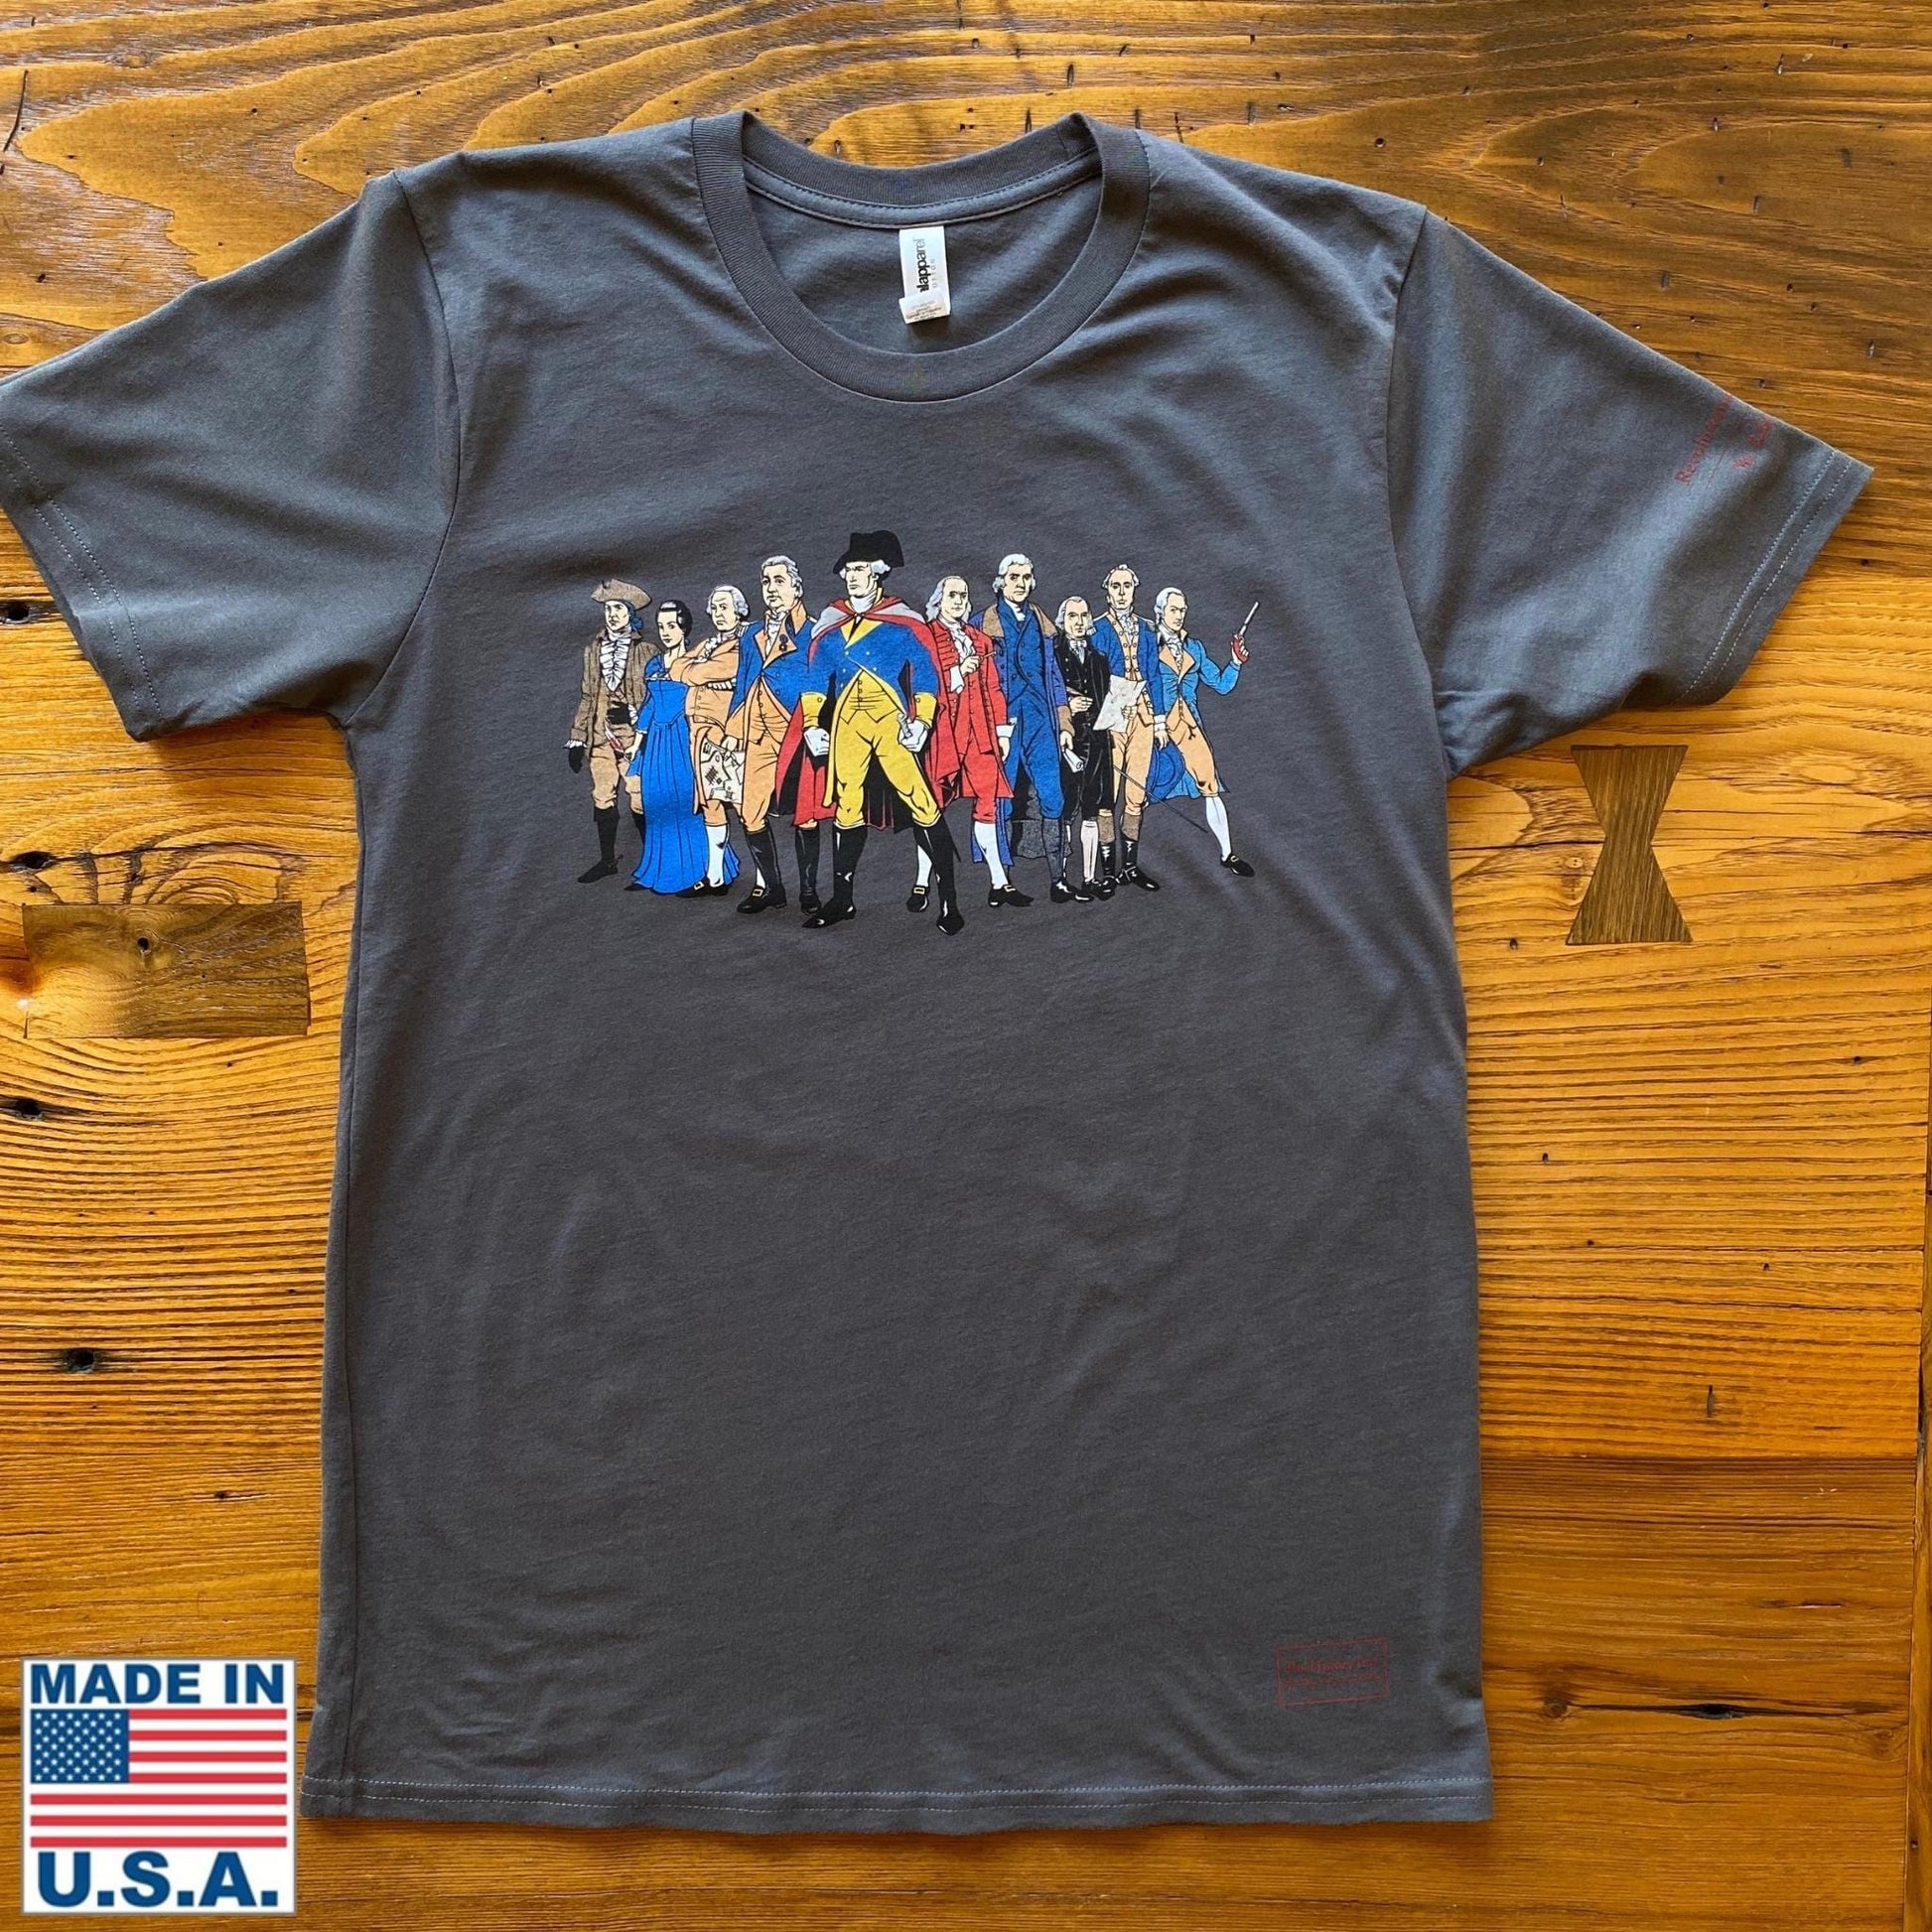 Ten "Revolutionary Superheroes" T-Shirt in Dark grey from The History List store